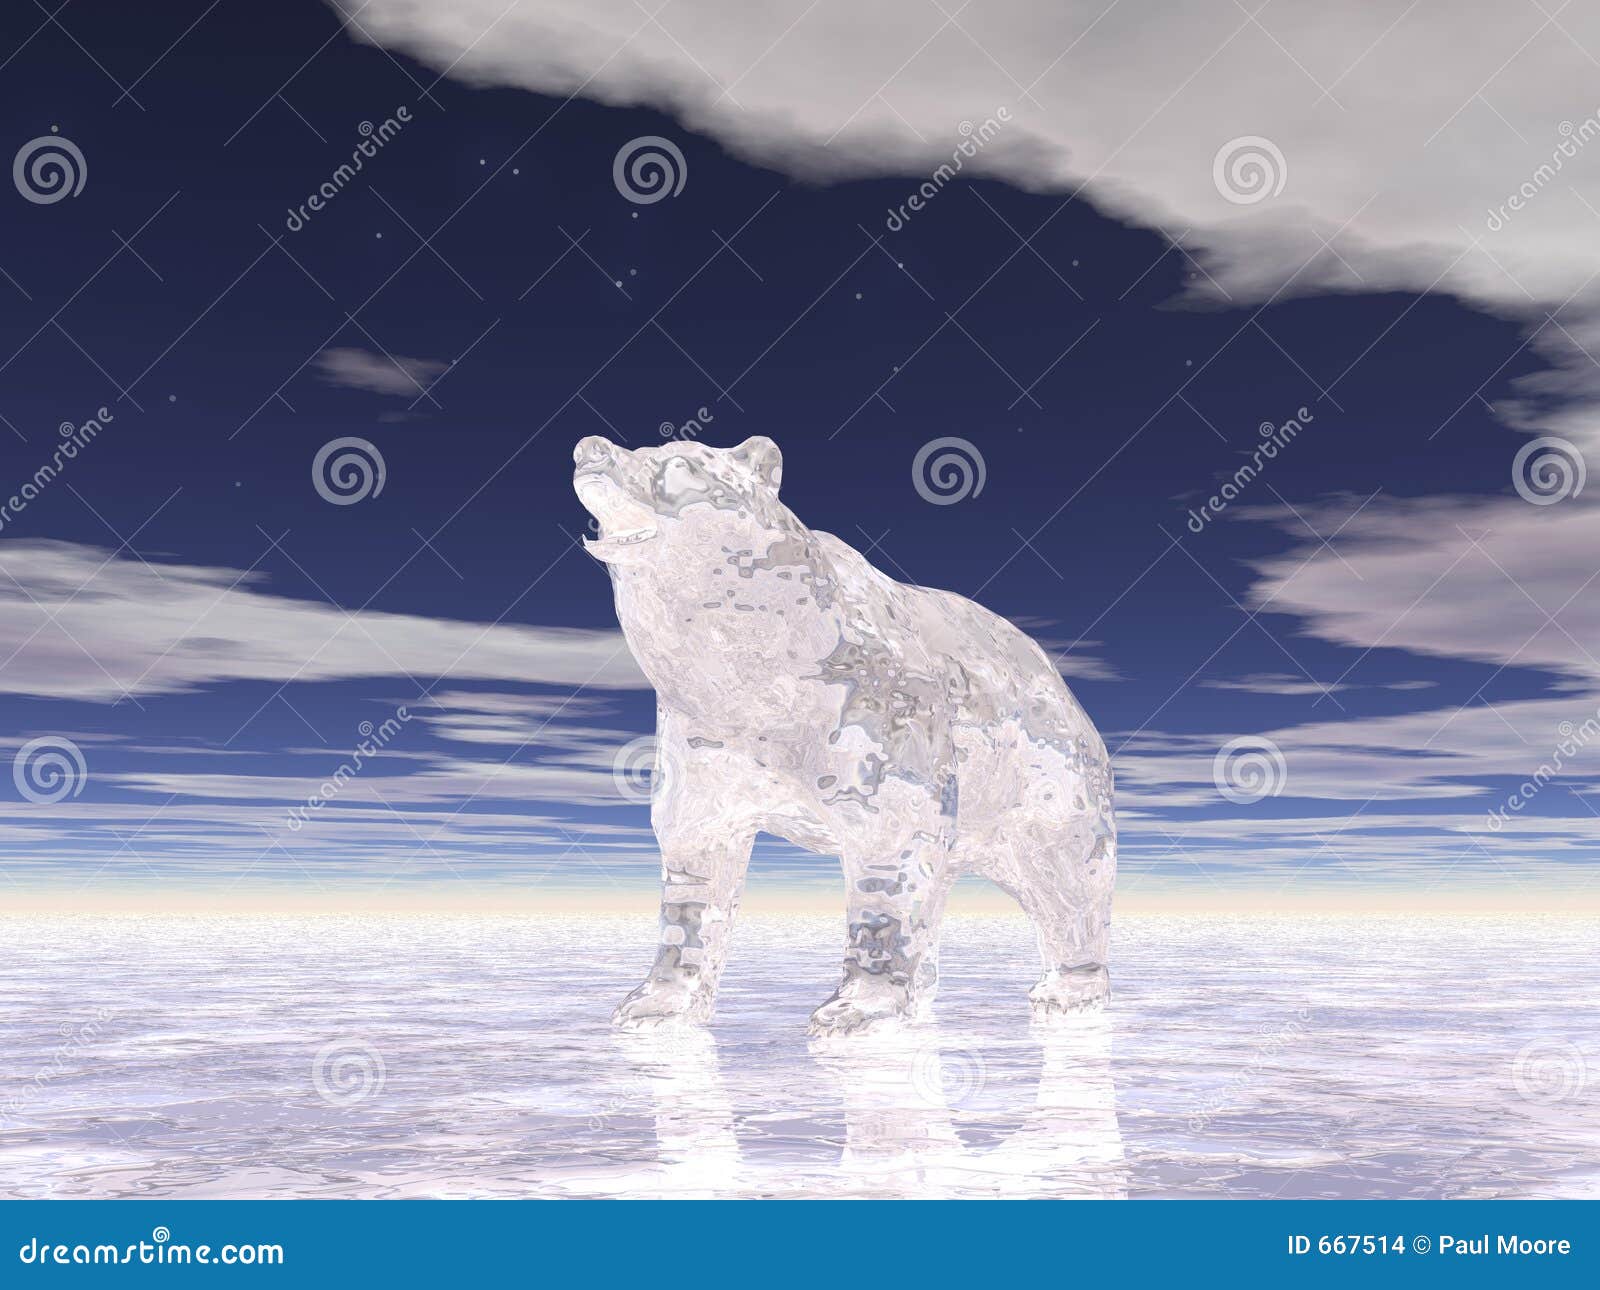 Ice Bear Two. Illustrated ice bear